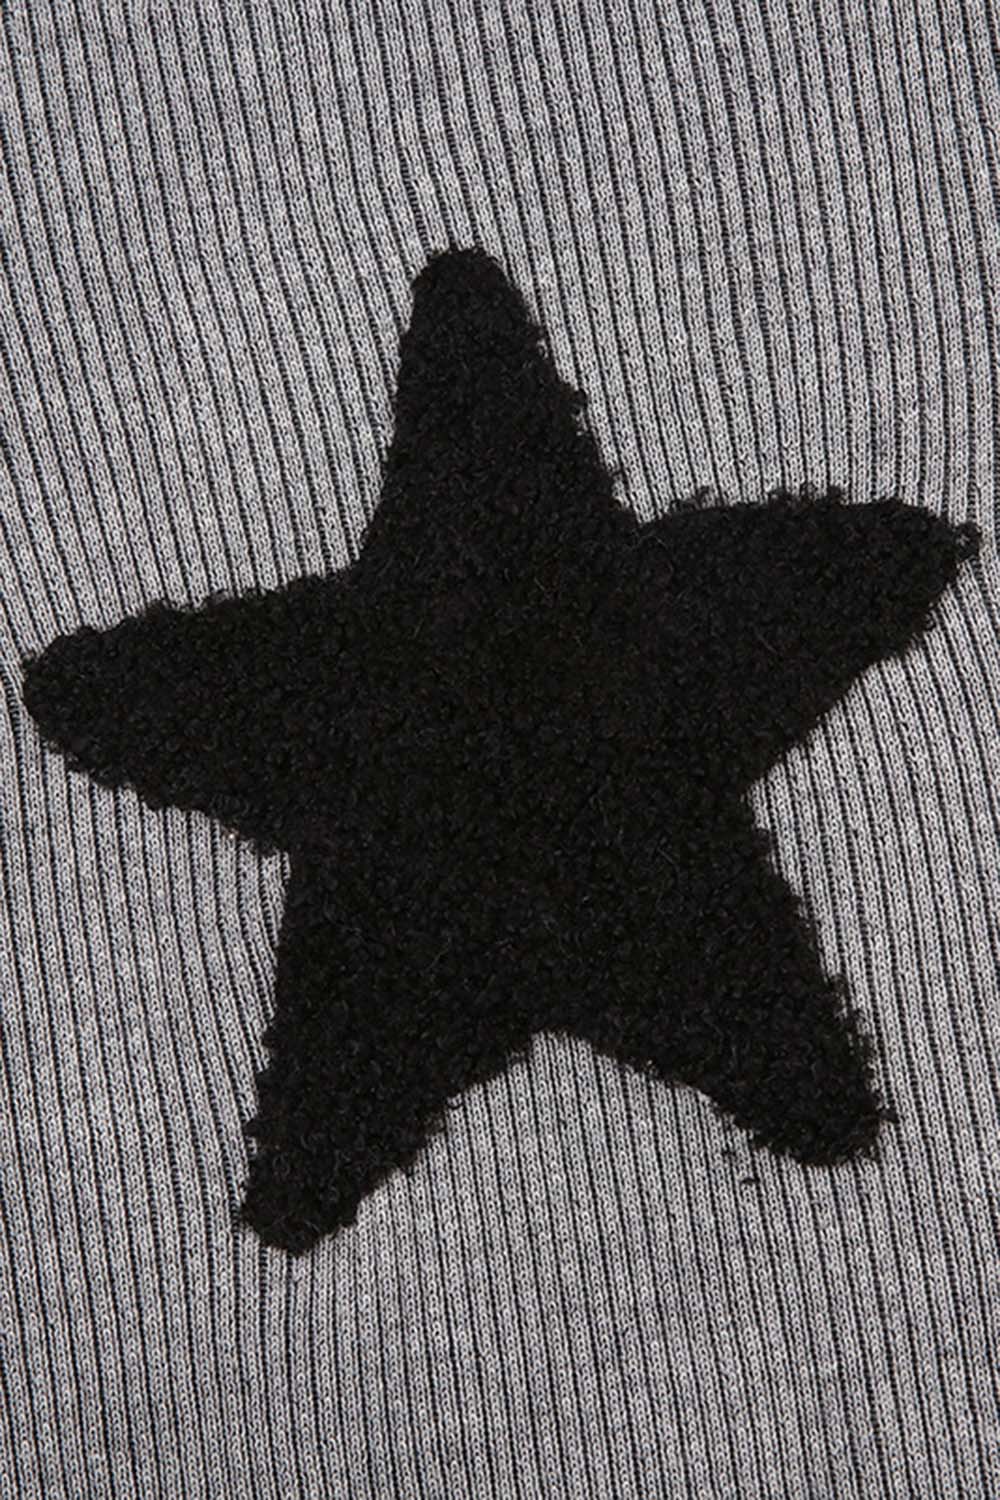 Star Pattern Cropped Grey Sweater